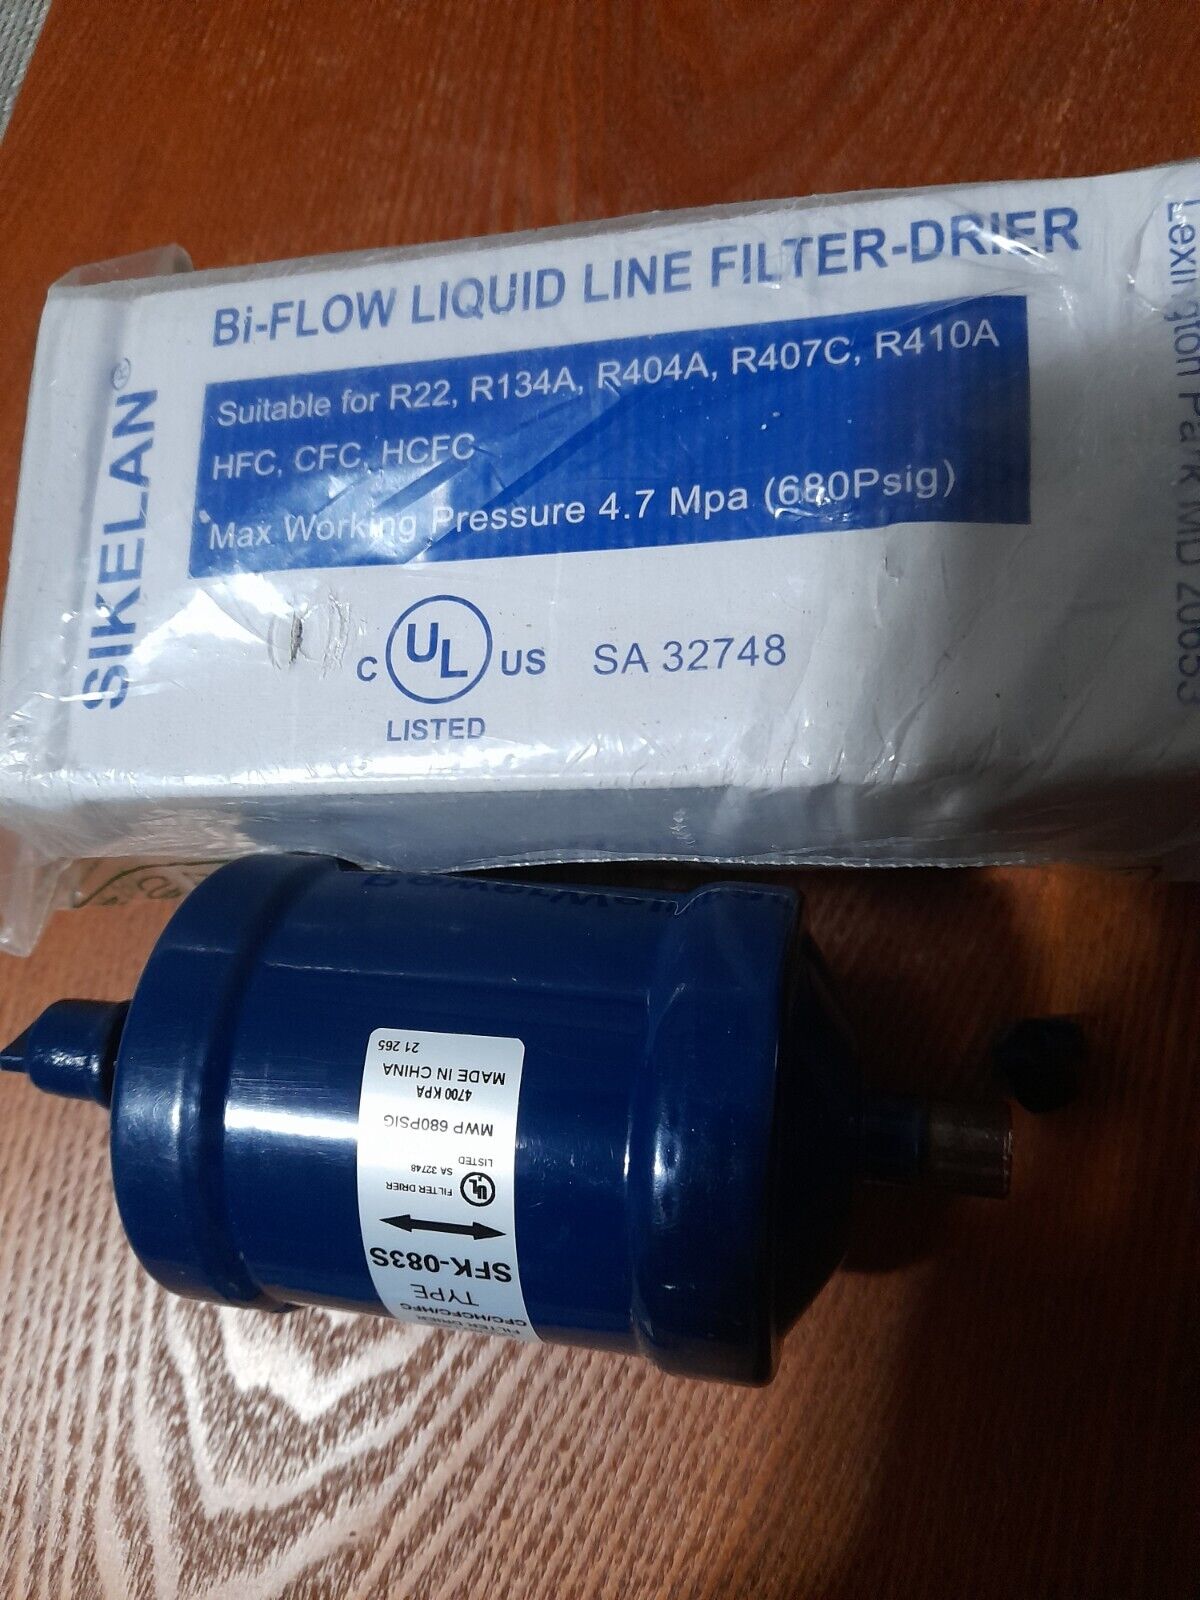 Slkelan SFK-083S Liquid Line Filter Drier